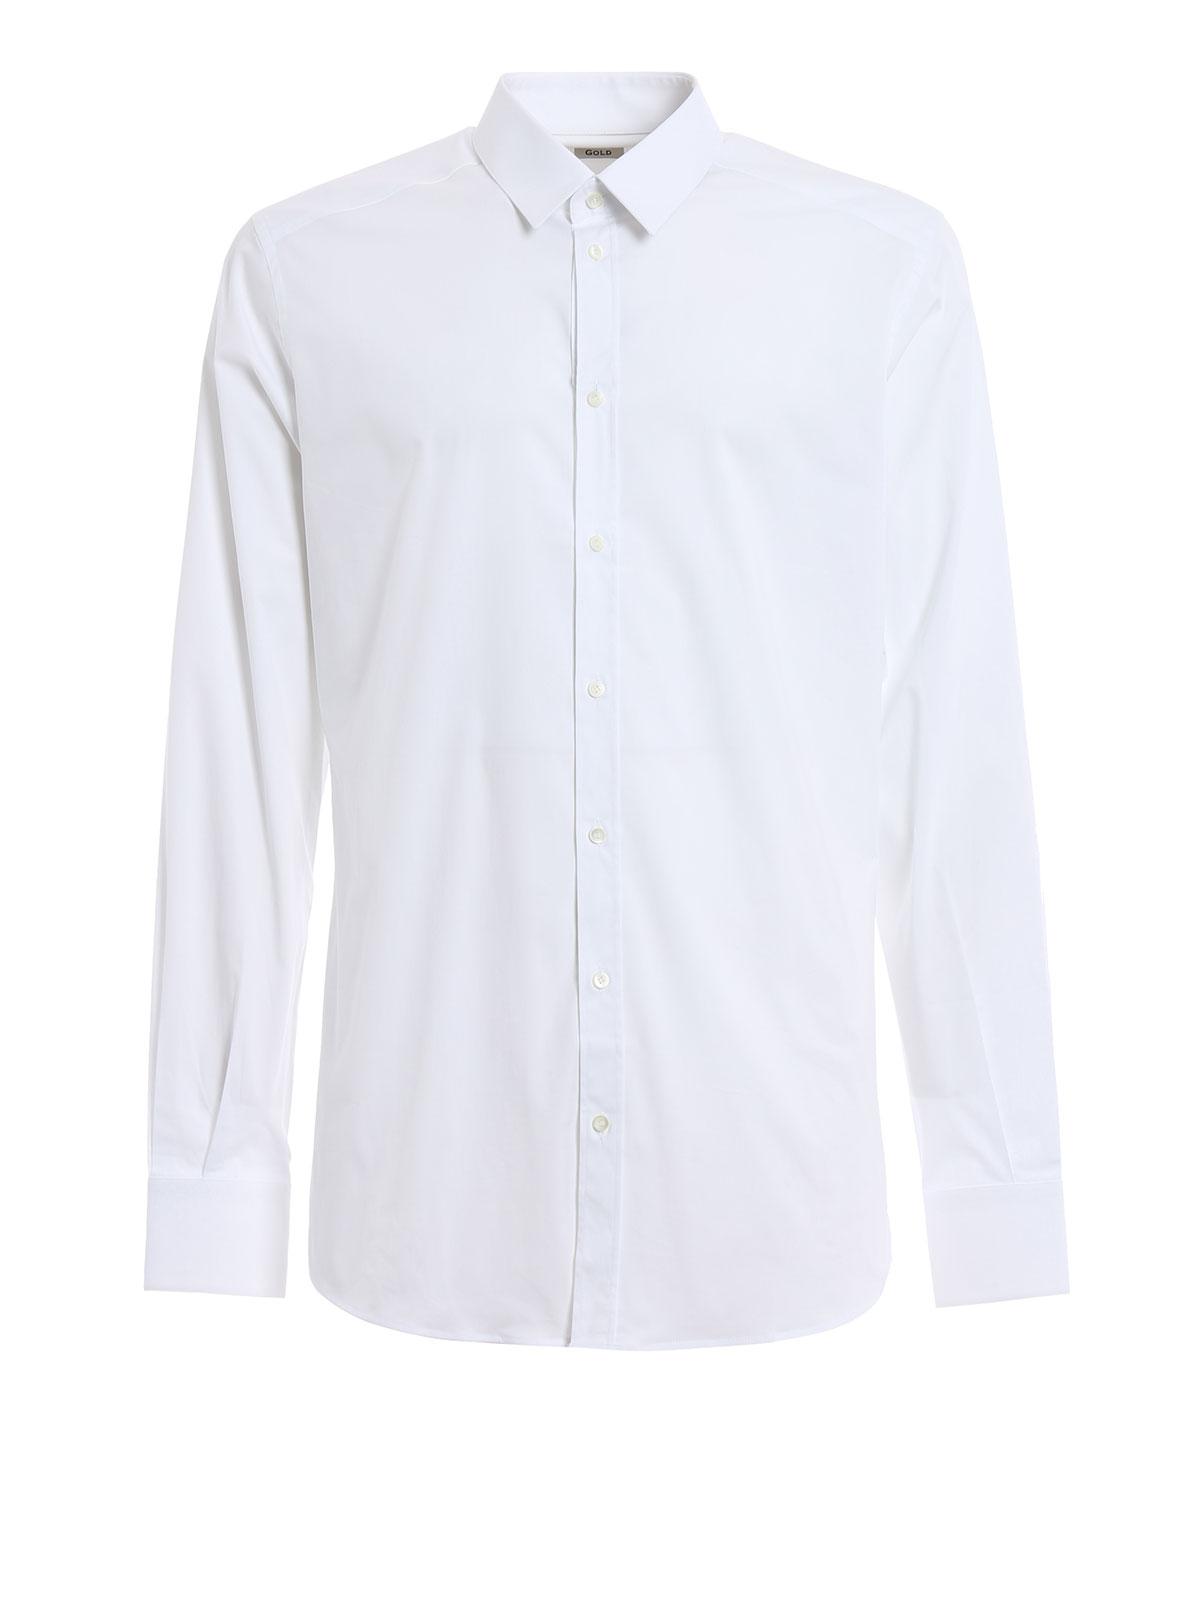 Dolce & Gabbana Stretch Poplin Cotton Shirt in White for Men - Lyst